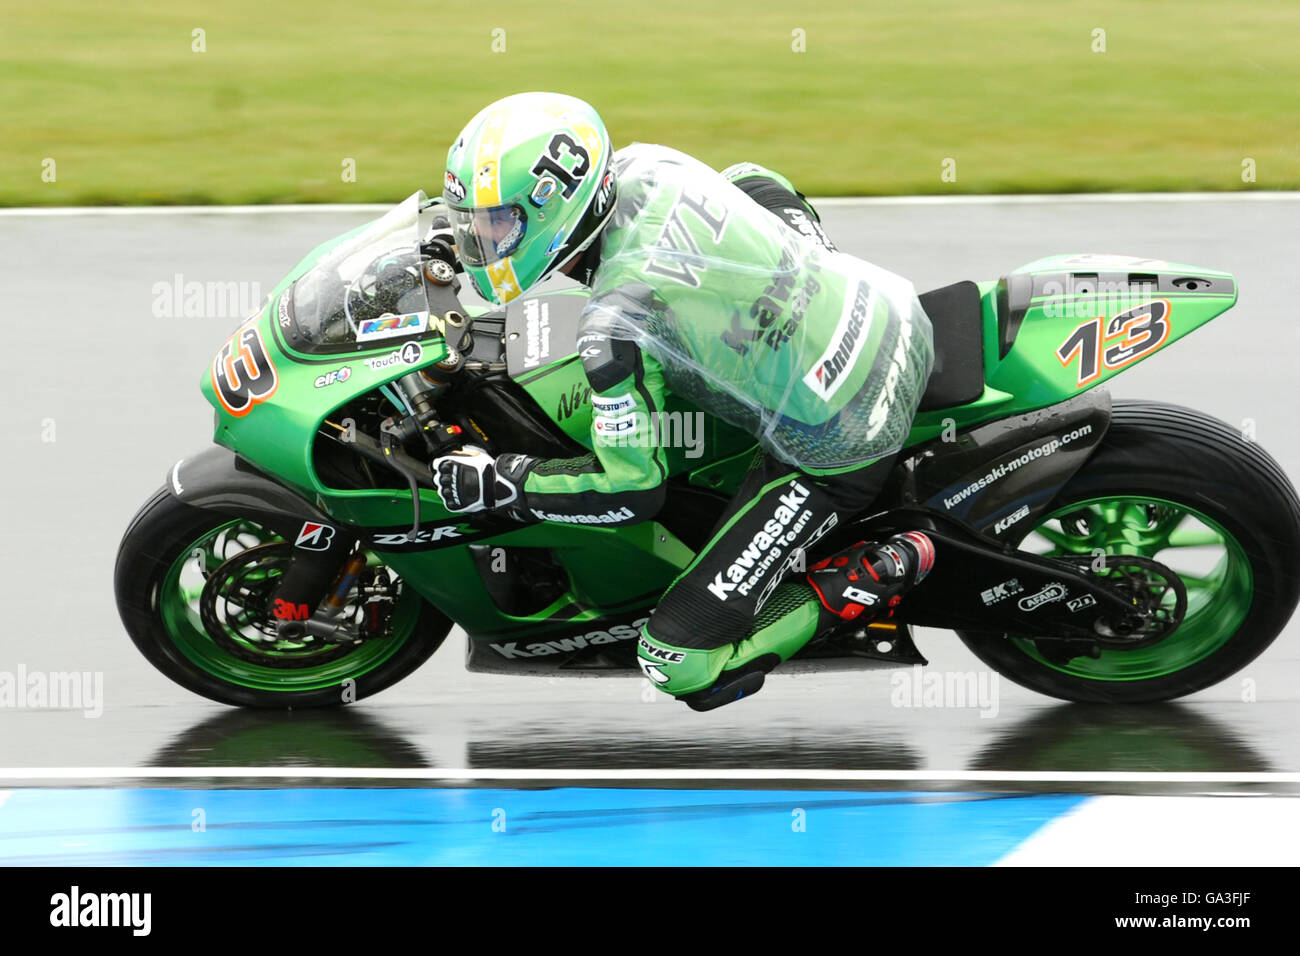 Motorcycling - British Grand Prix - Moto GP - Practice - Donington Park. Anthony West, Kawaski Racing Stock Photo